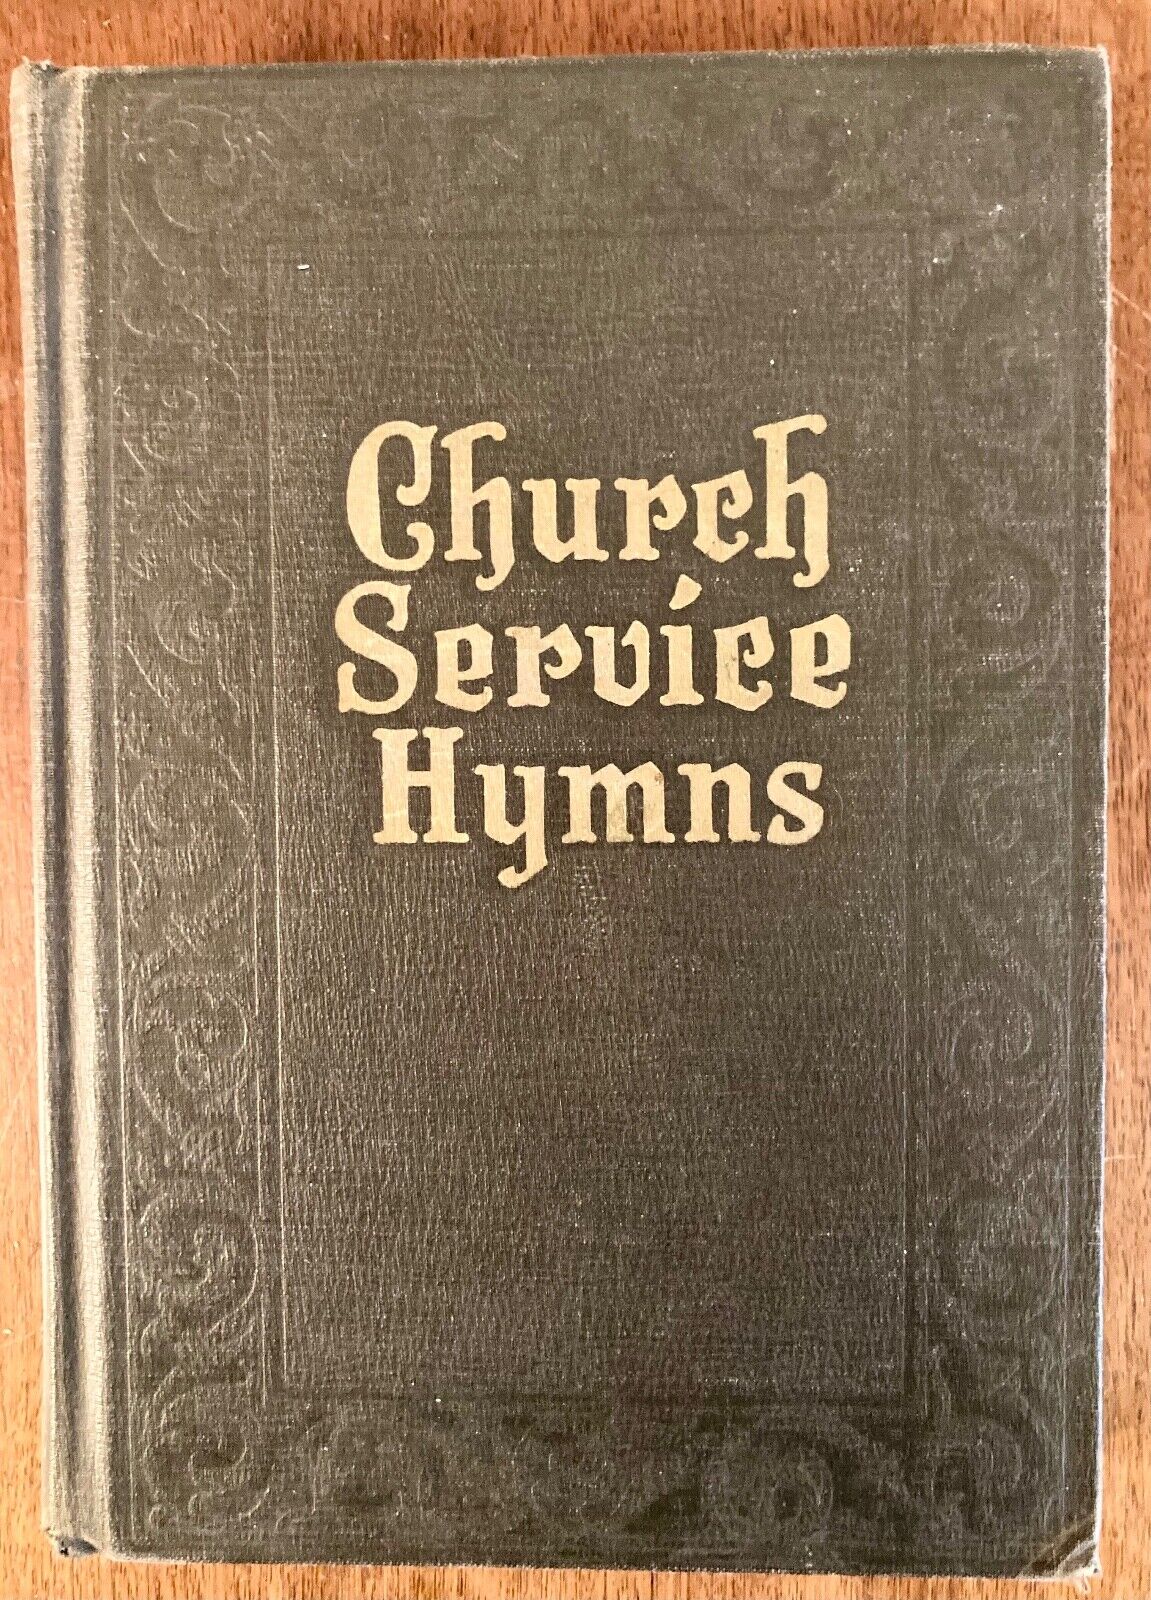 1948 Rodeheaver Hall-Mack Hymnal Gospel Songs Songbook CHURCH SERVICE HYMNS